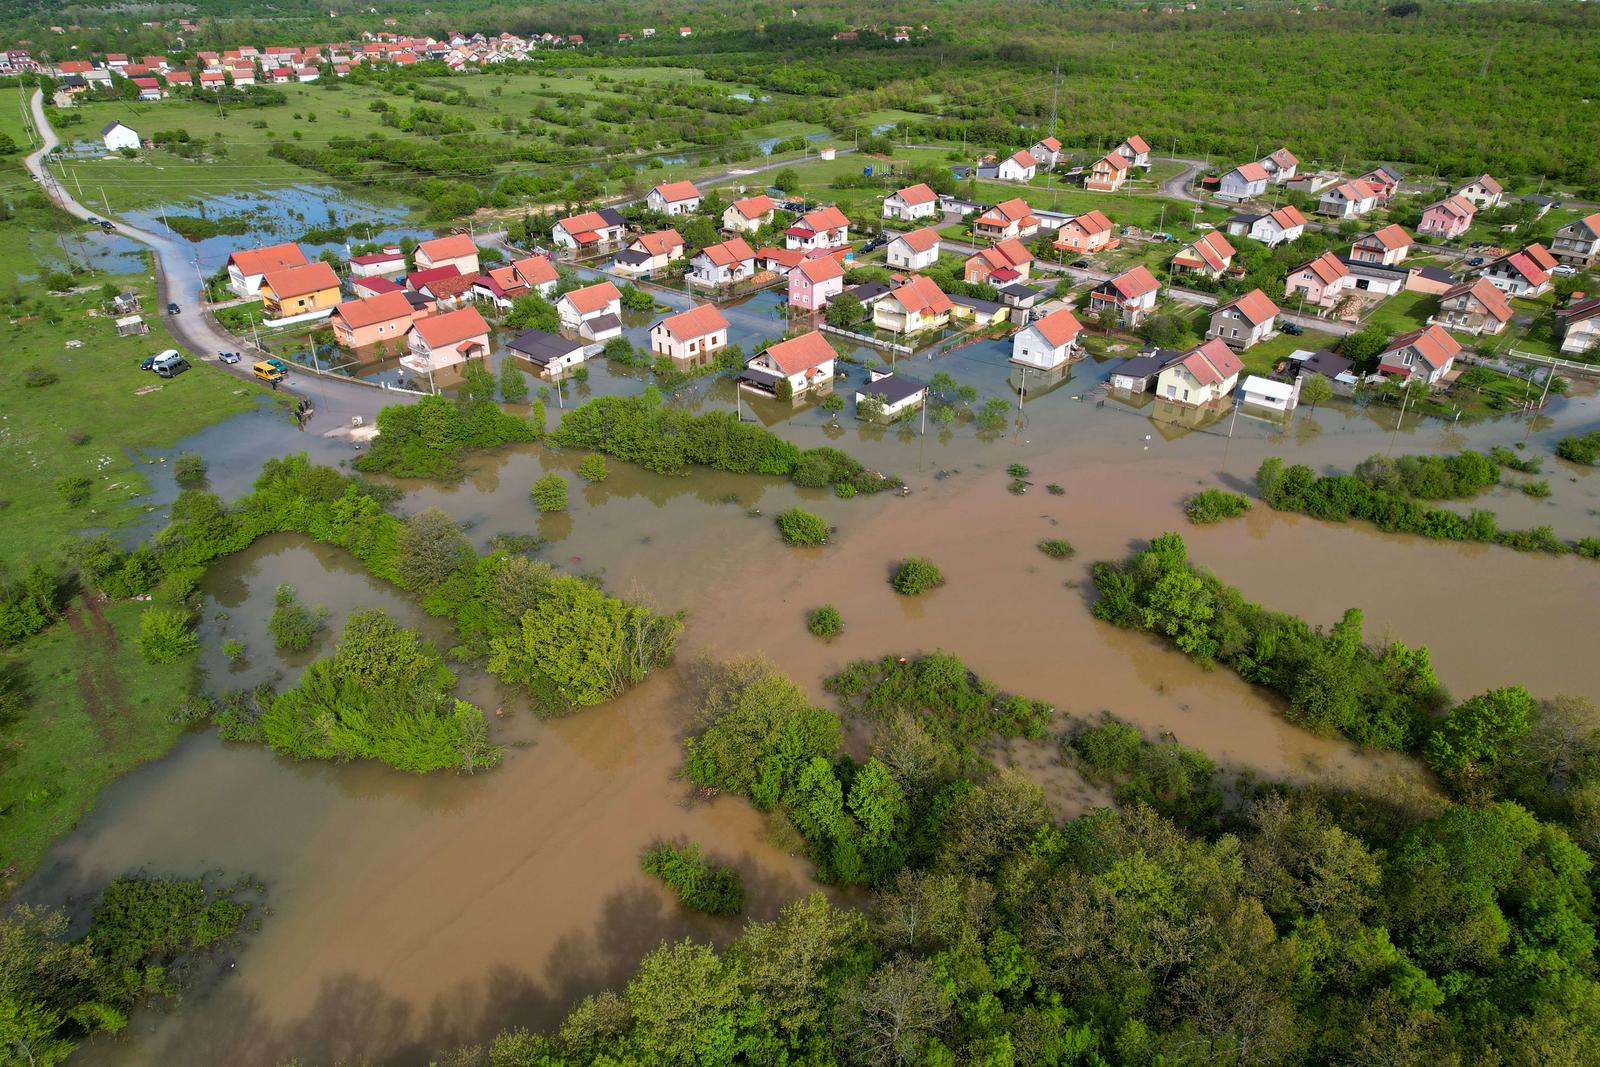 15.05.2023., Gracac - U Gracacu se tek jutro nakon poplave vidi razmjer stete nakon sto se izlila rijeka Otuca. Photo: Slaven Branislav Babic/PIXSELL